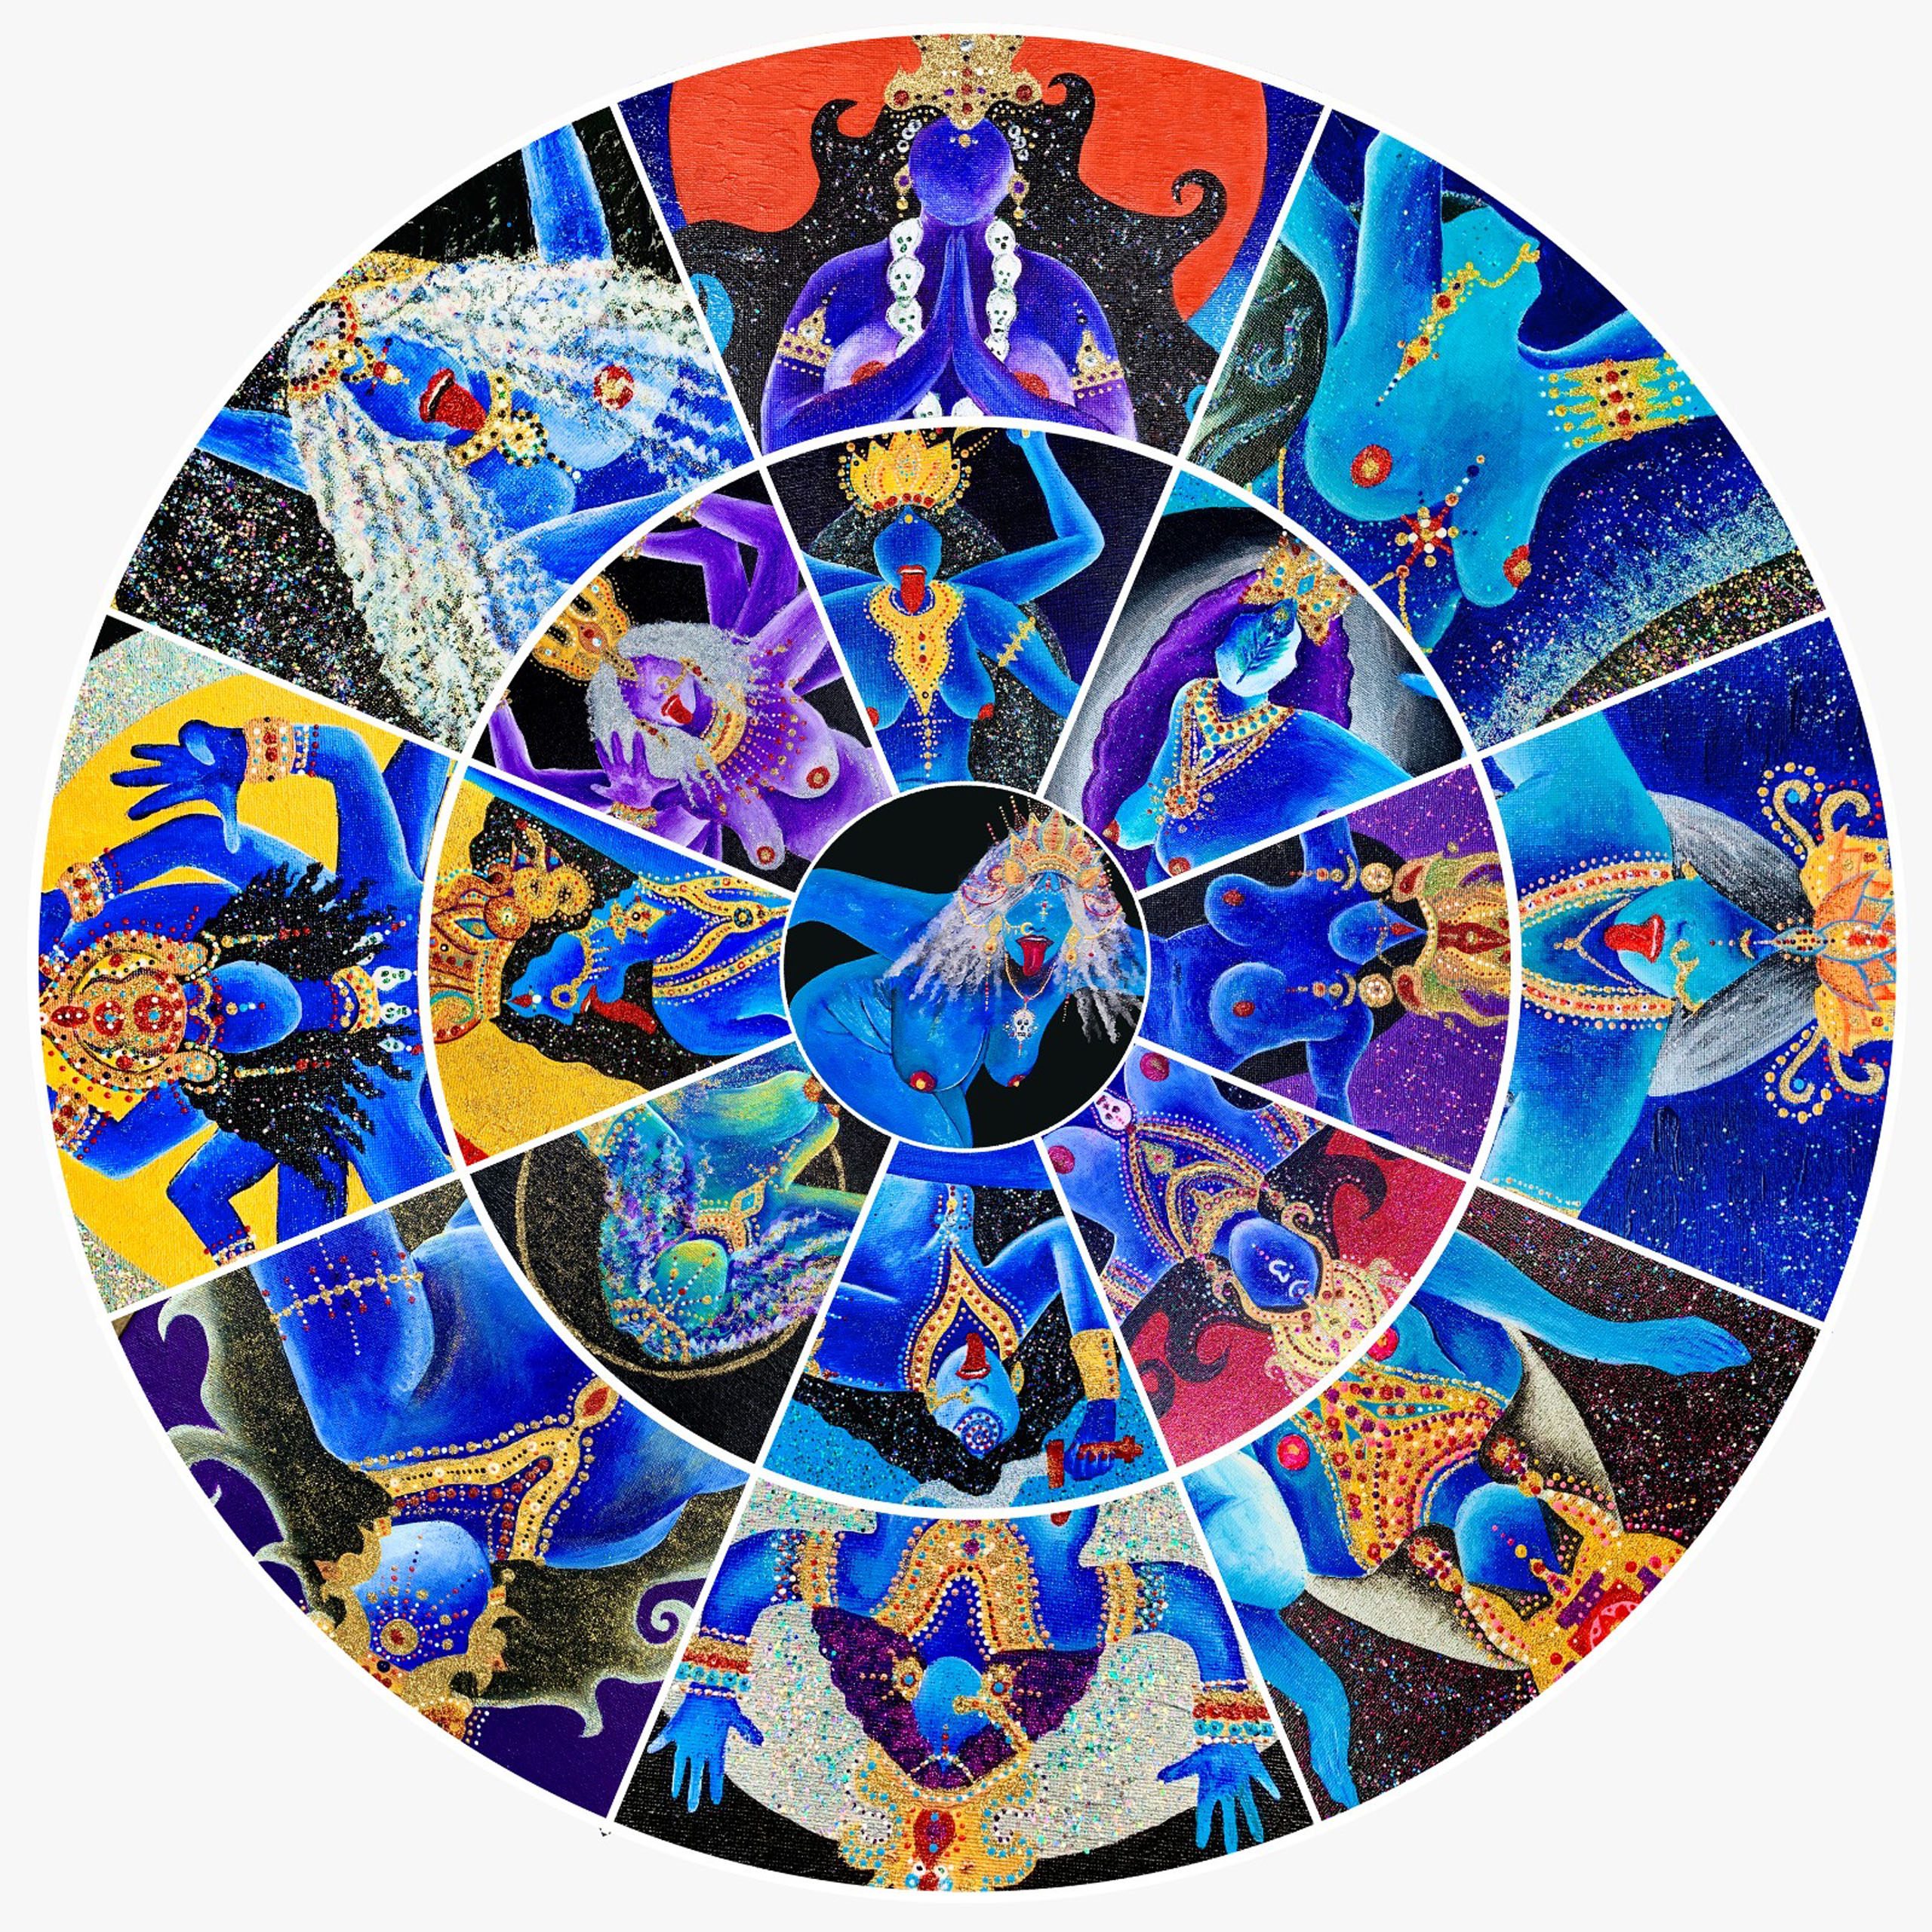 The Wheel of Kali